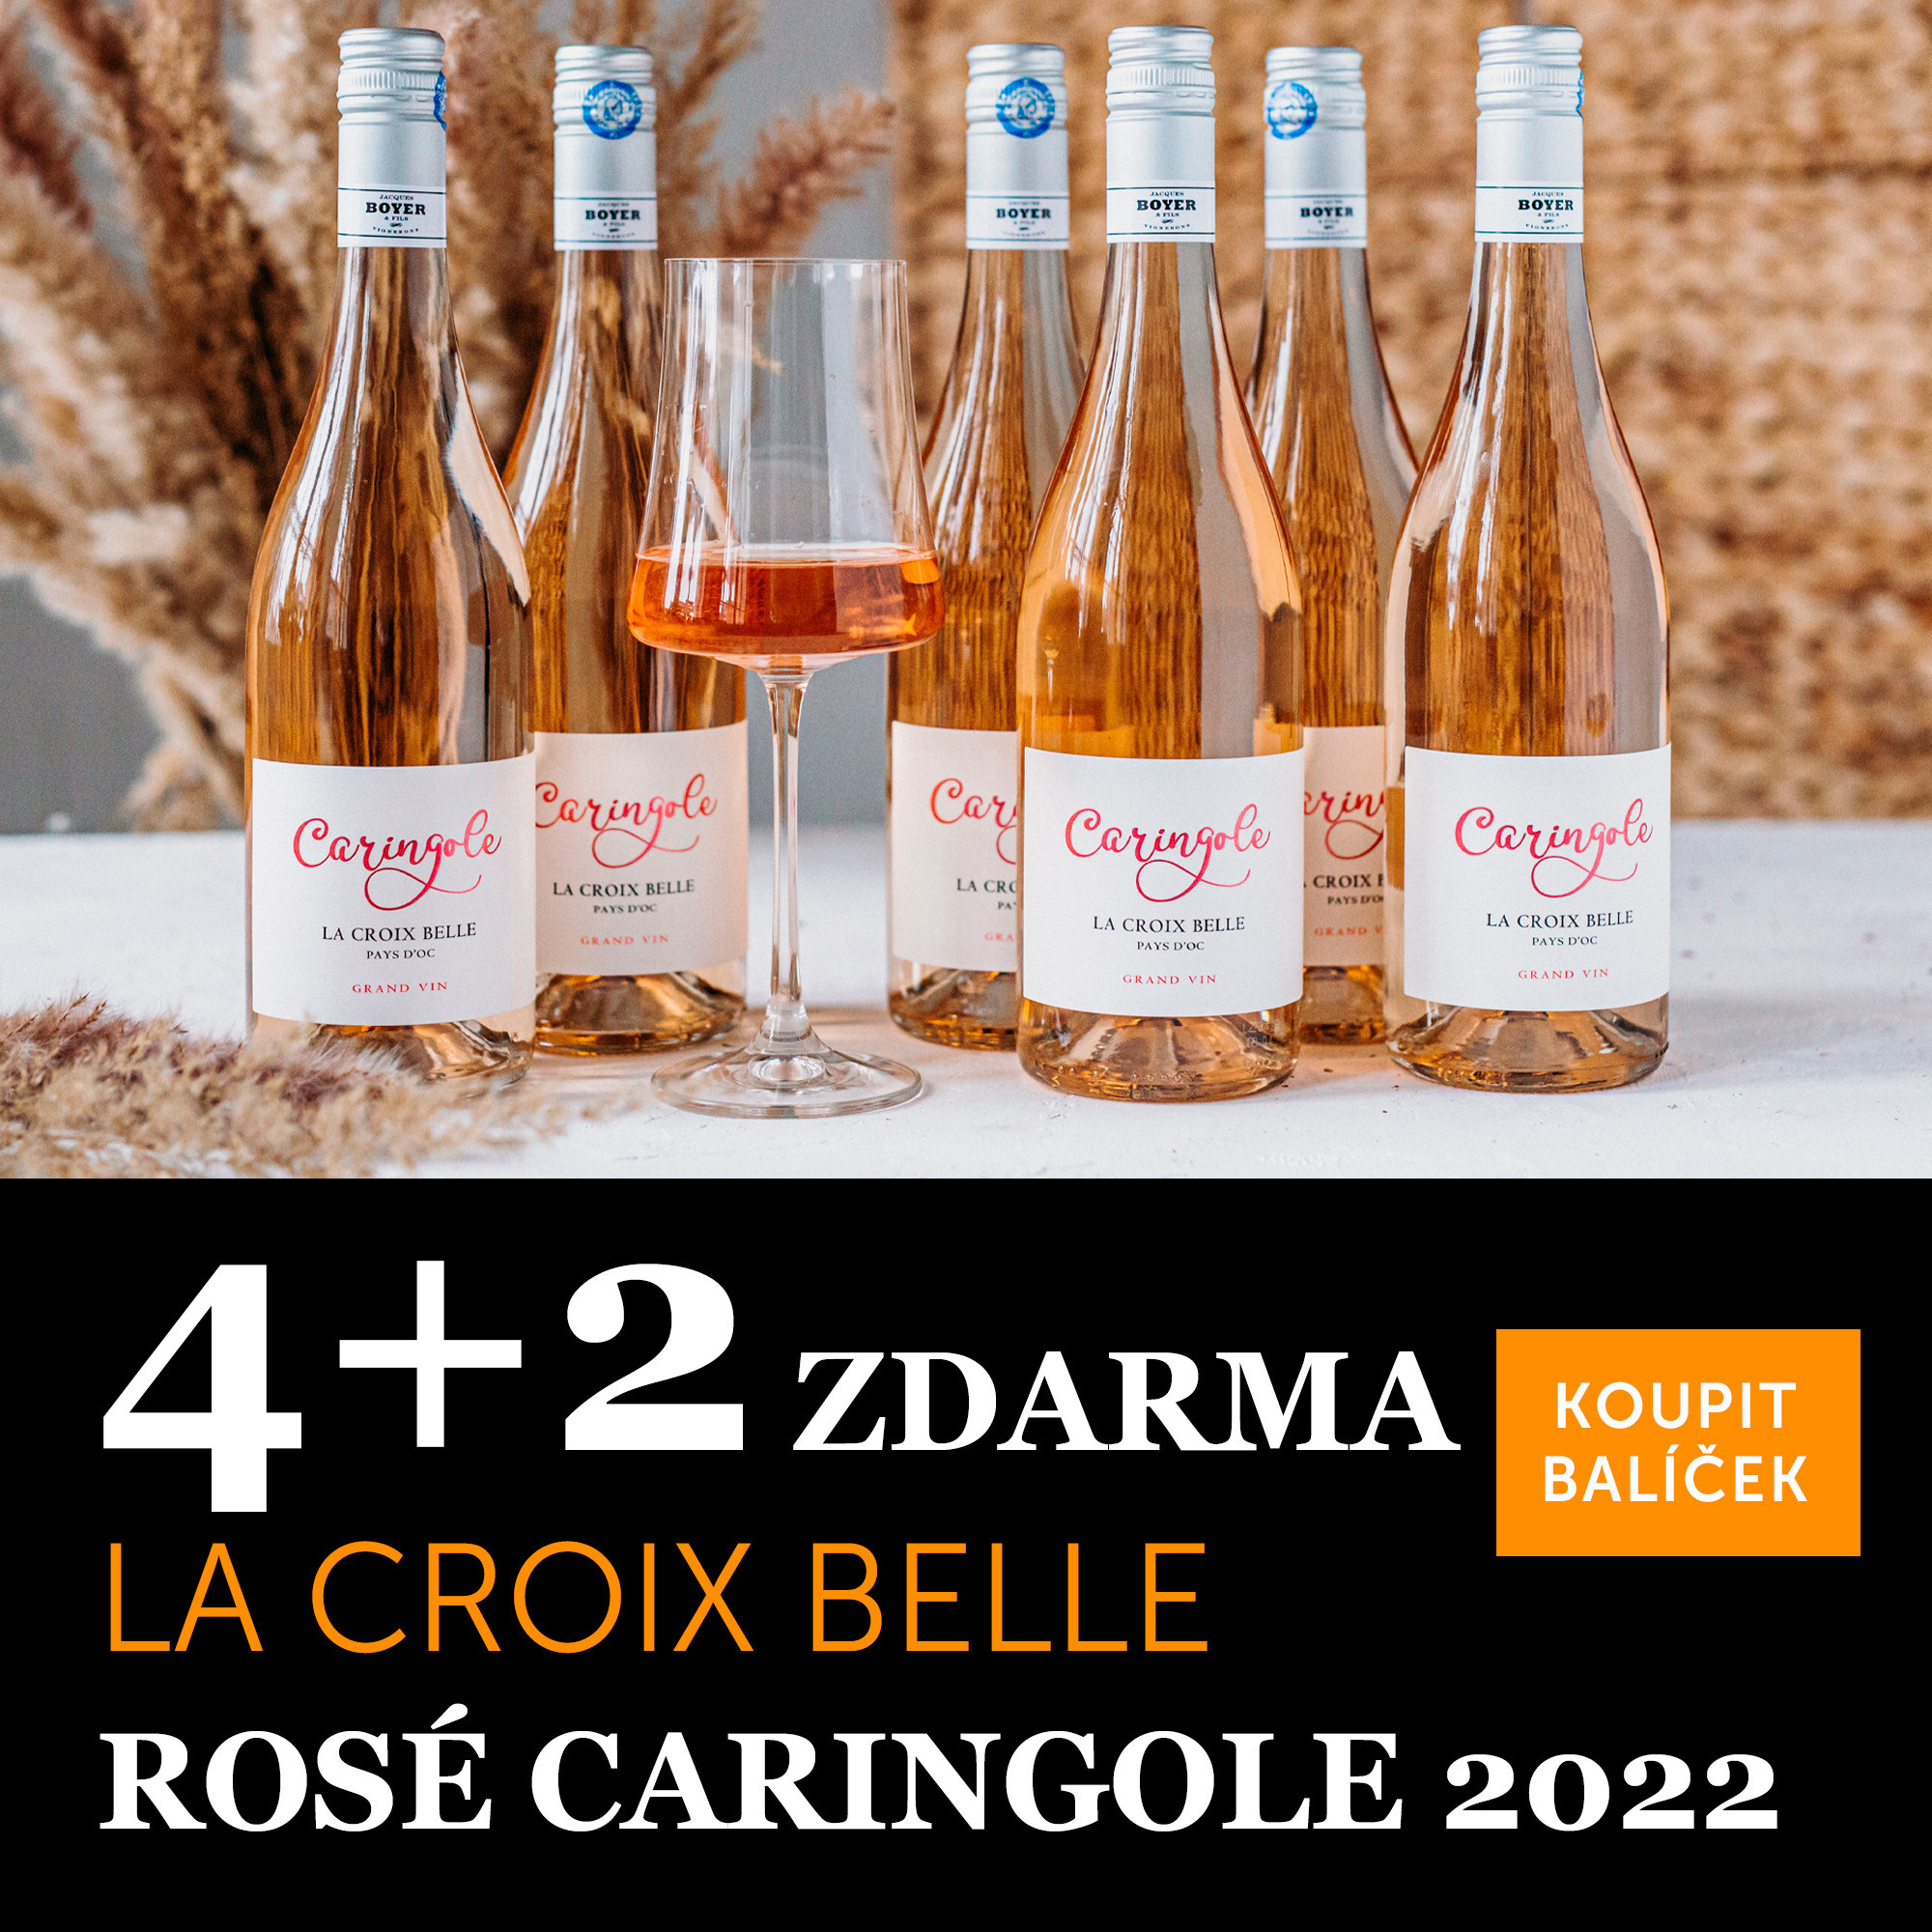 Rosé Caringole 2022 La Croix Belle - 4+2 zdarma - UKONČENO